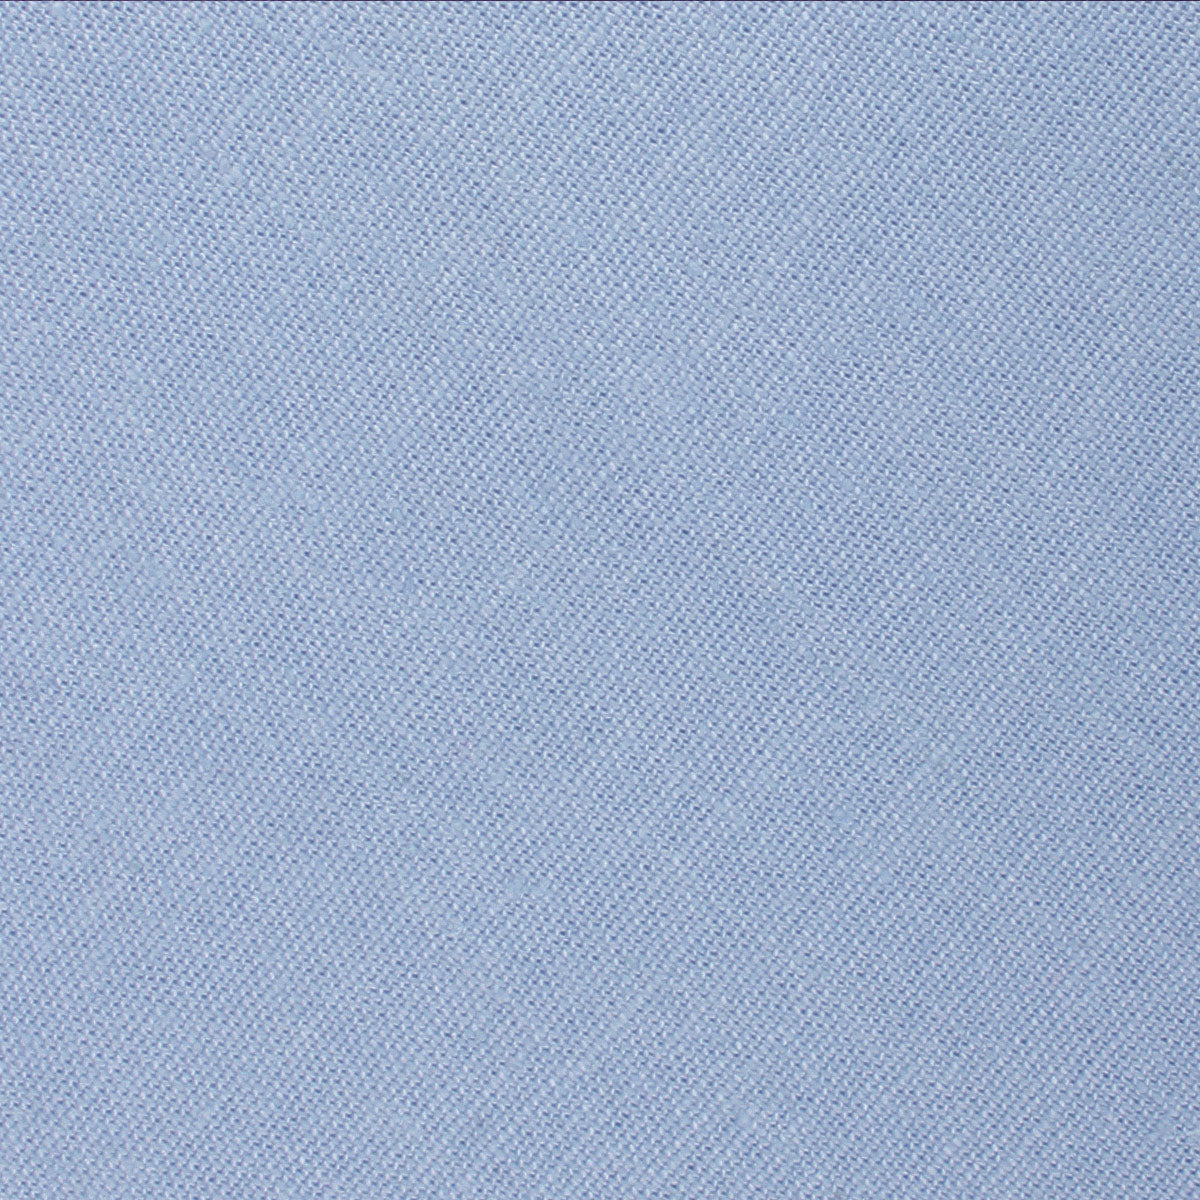 Ice Blue Linen Pocket Square Fabric